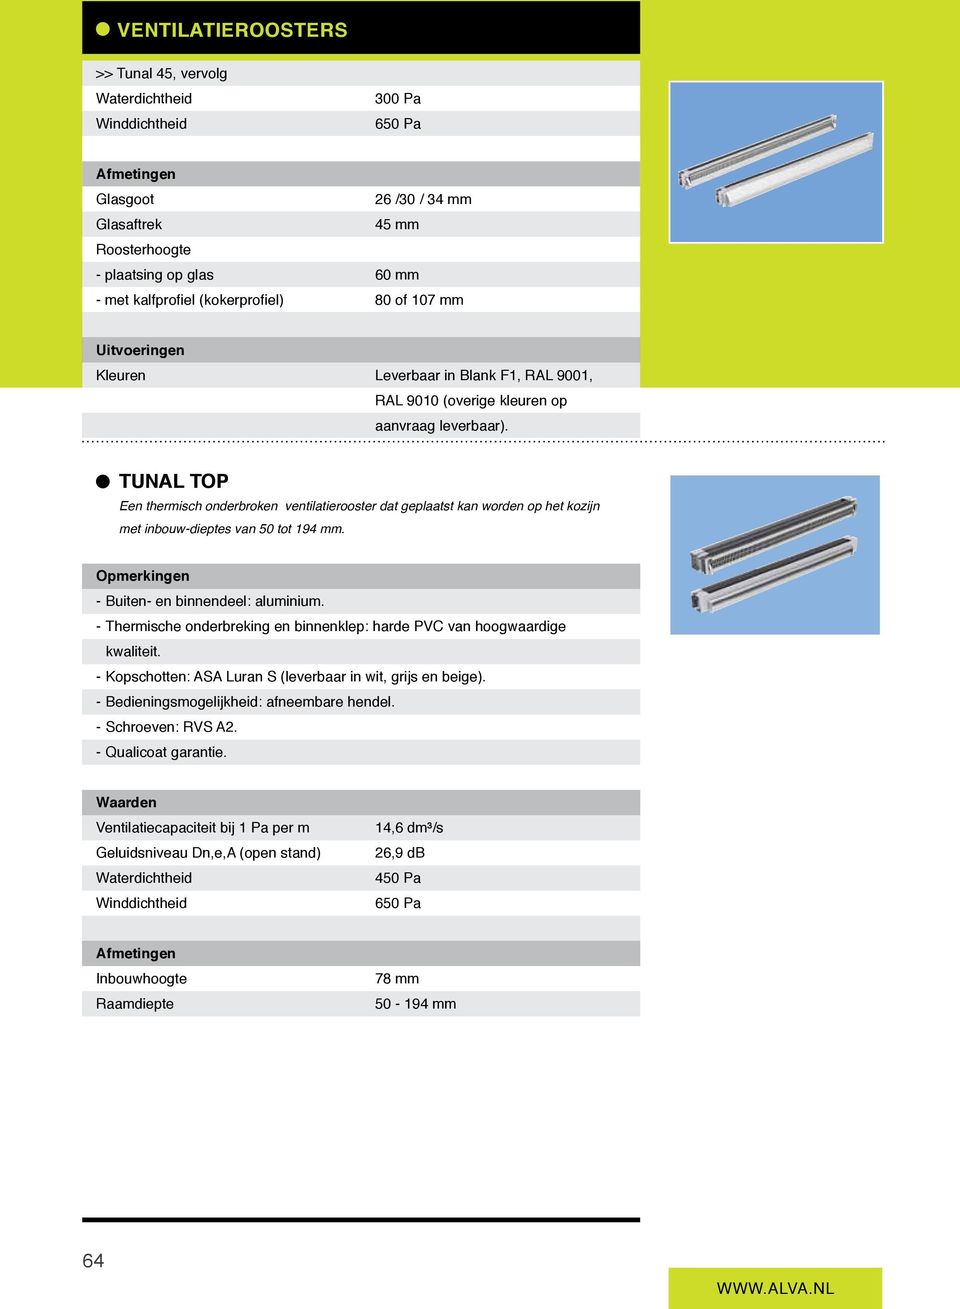 - Buiten- en binnendeel: aluminium. - Thermische onderbreking en binnenklep: harde PVC van hoogwaardige kwaliteit.